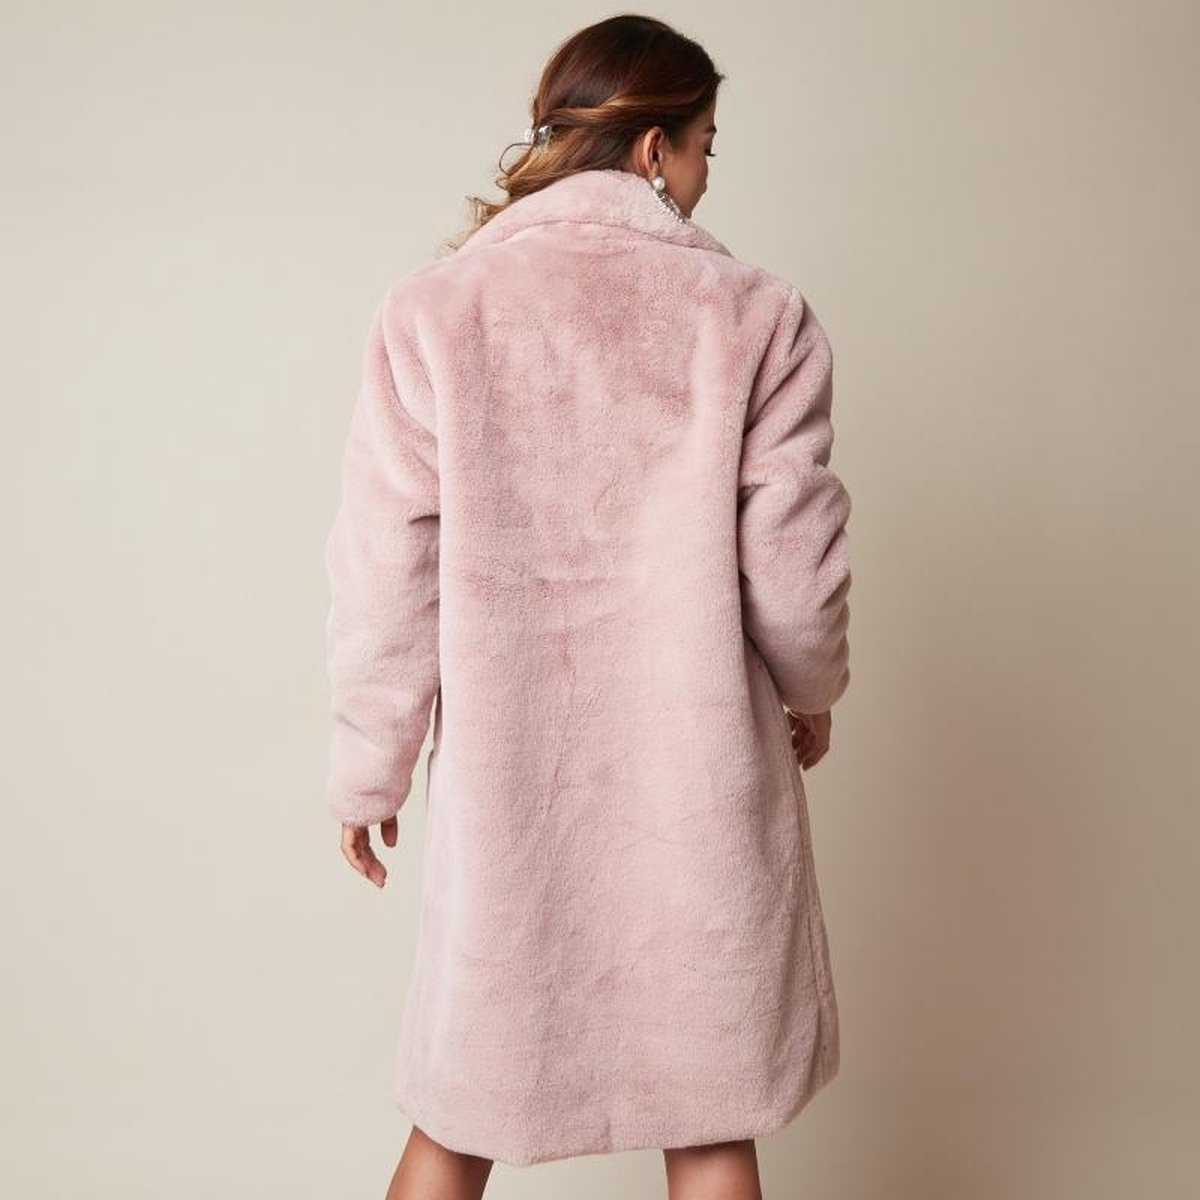 Faux fur jas Winter Bliss|Roze mantel|imitatiebont jas | bol.com